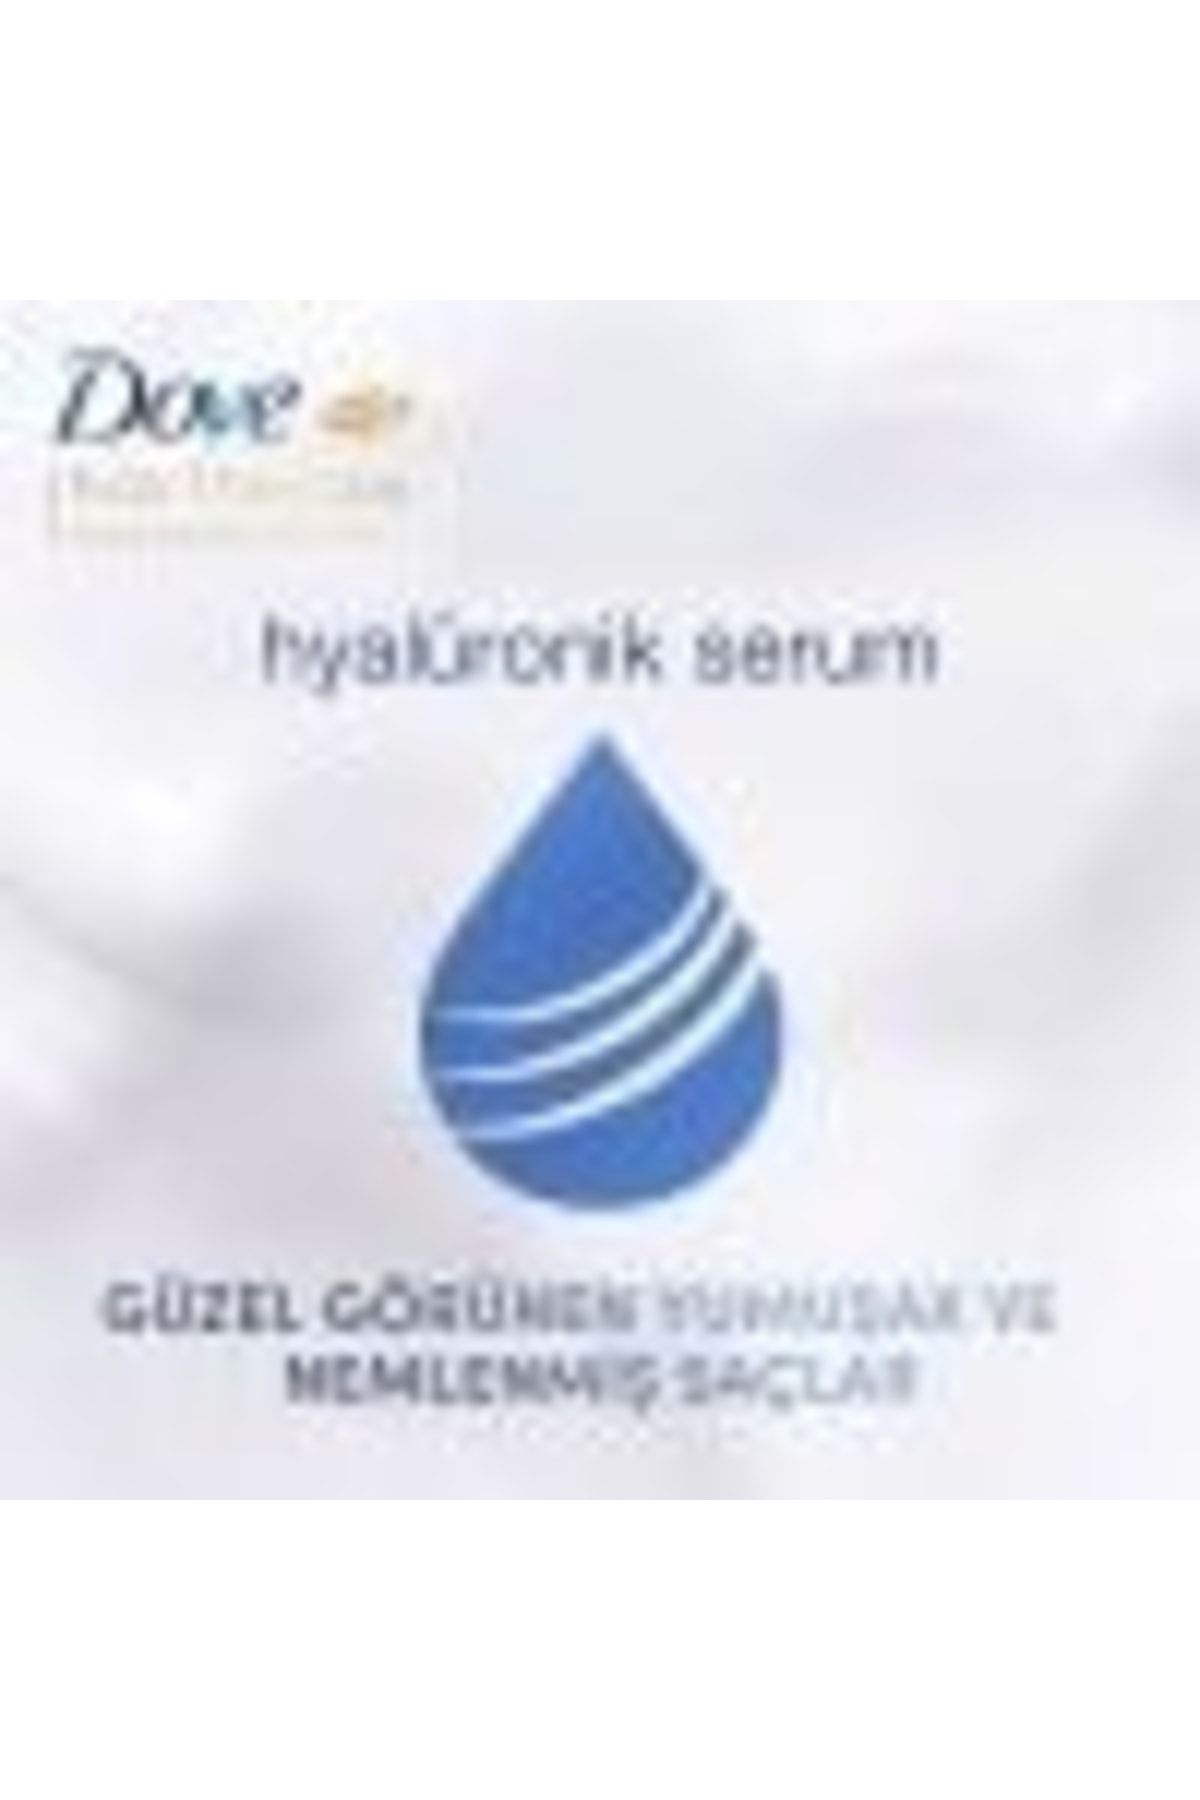 Dove Hair Therapy Hydration Spa Saç Kremi 170 Ml